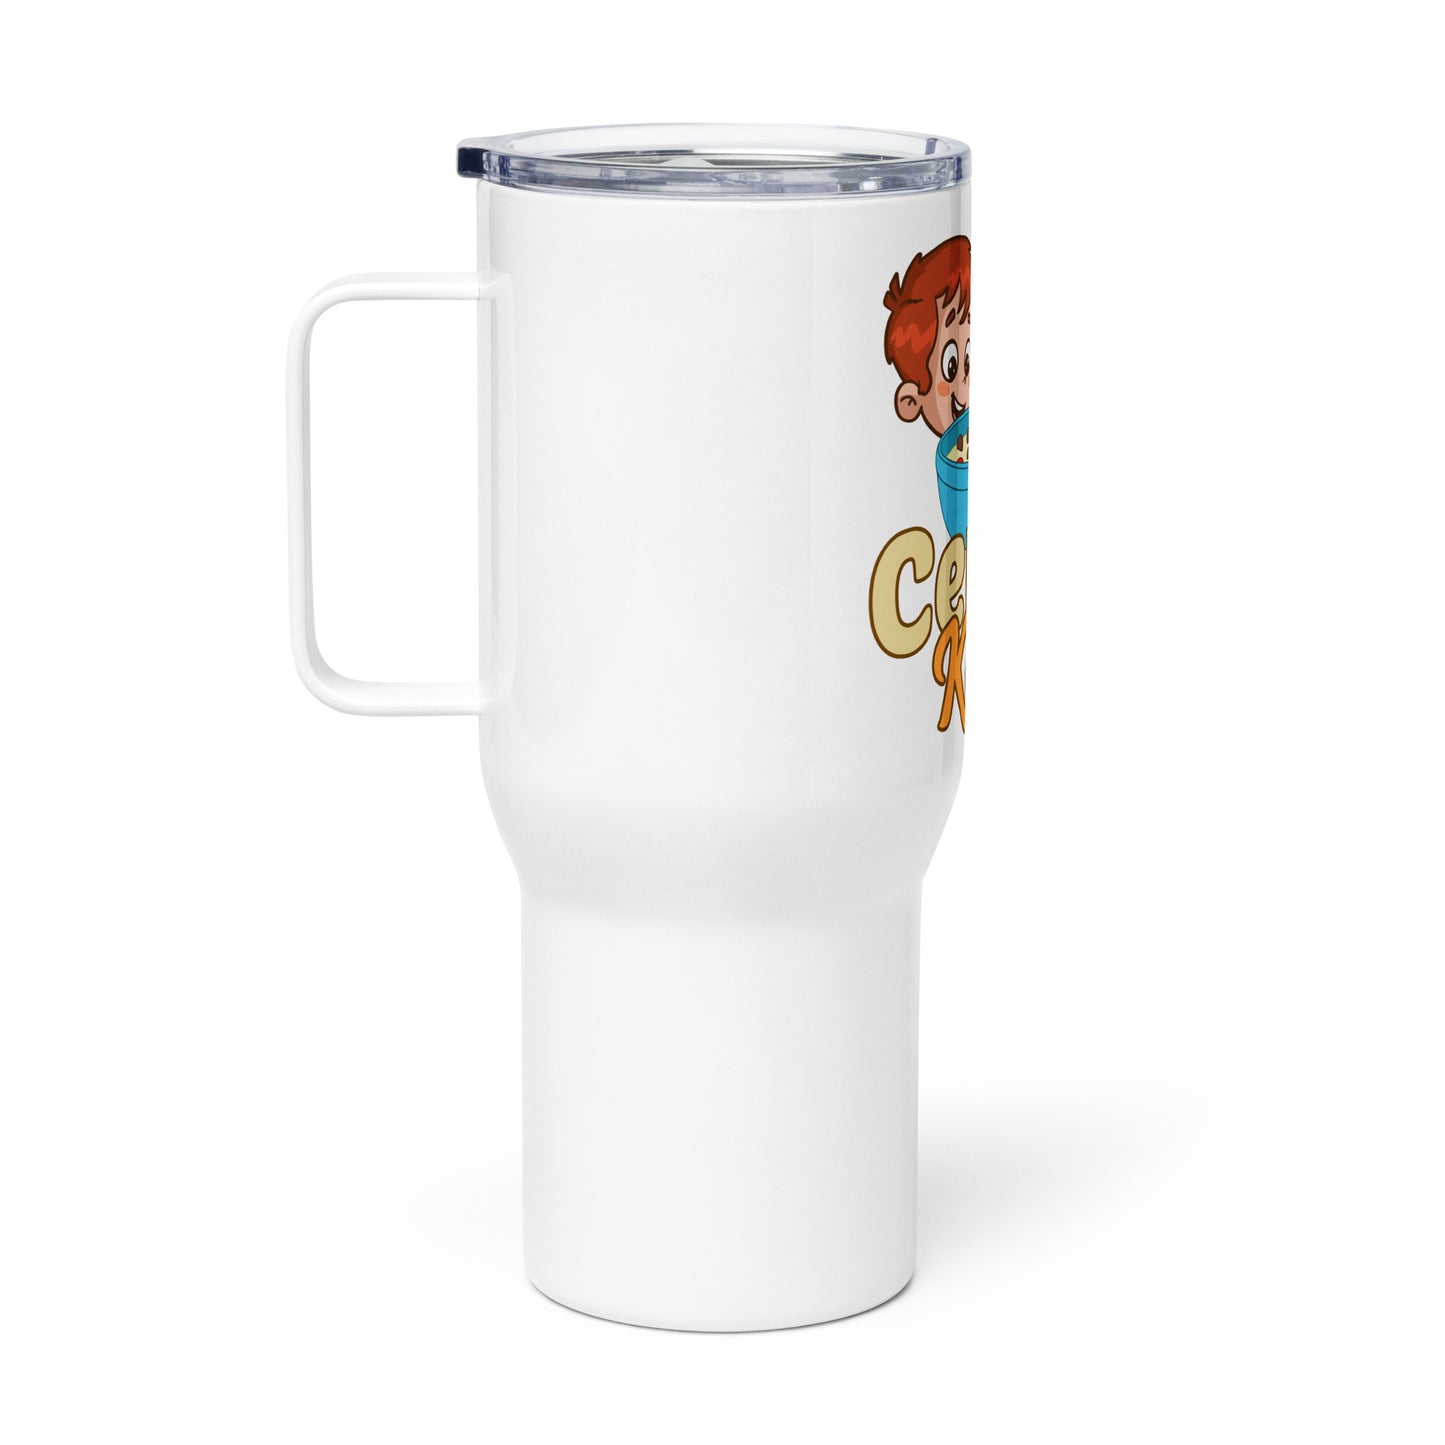 Cereal Killer Travel mug with a handle